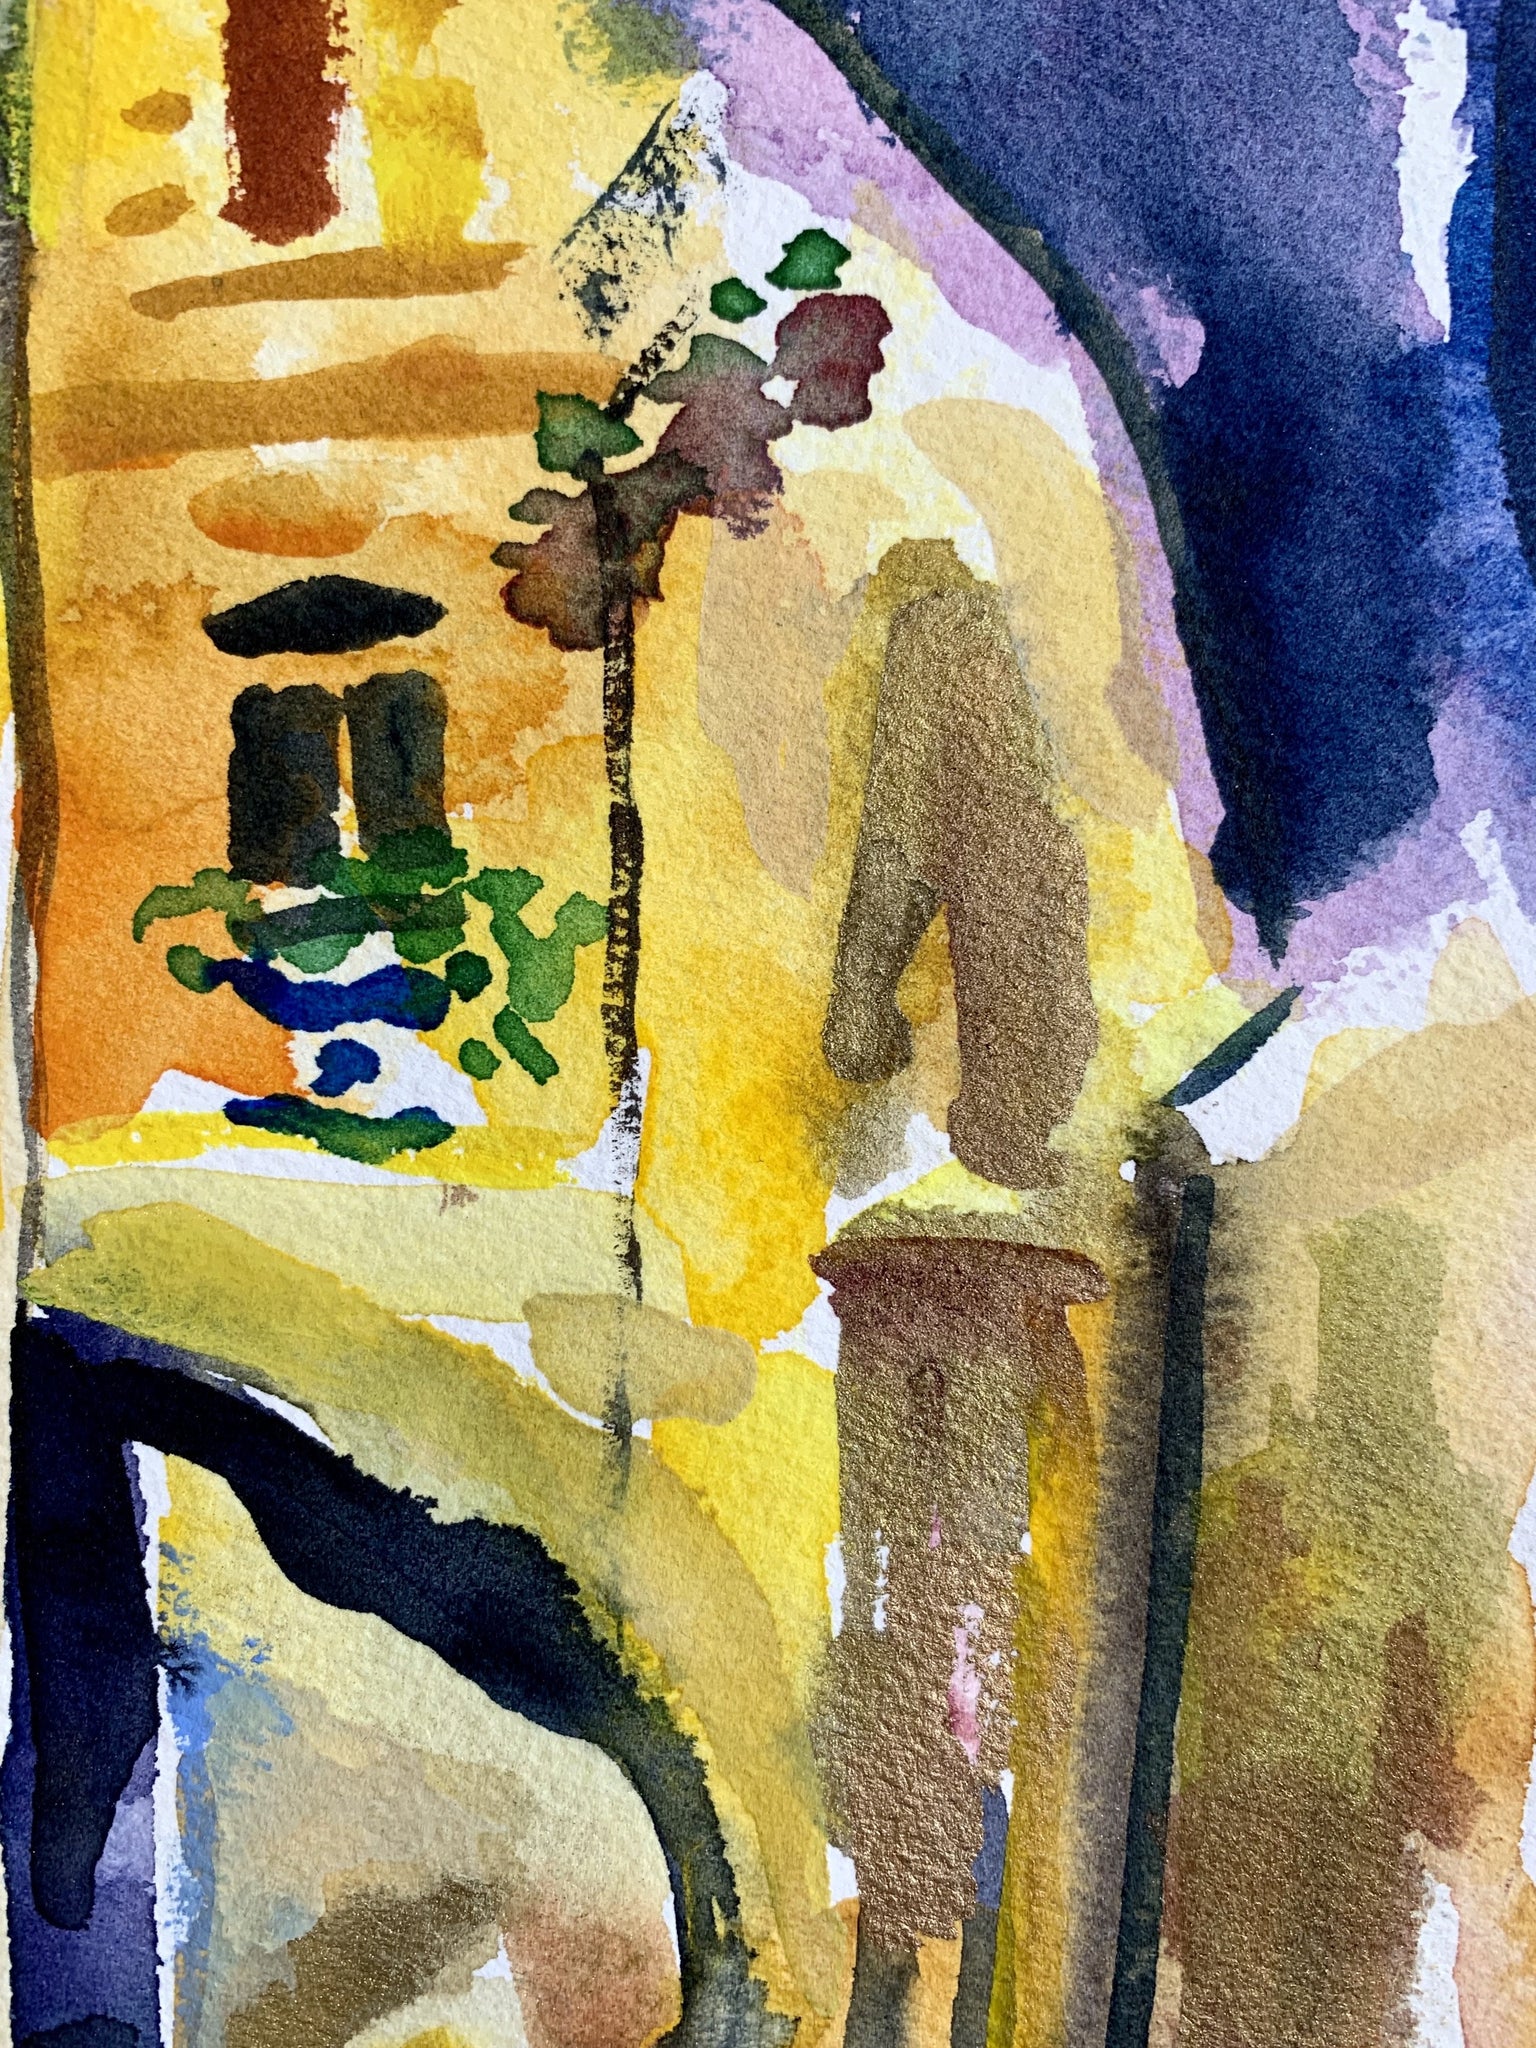 Jerusalem-Alley-Painting-close-up-version